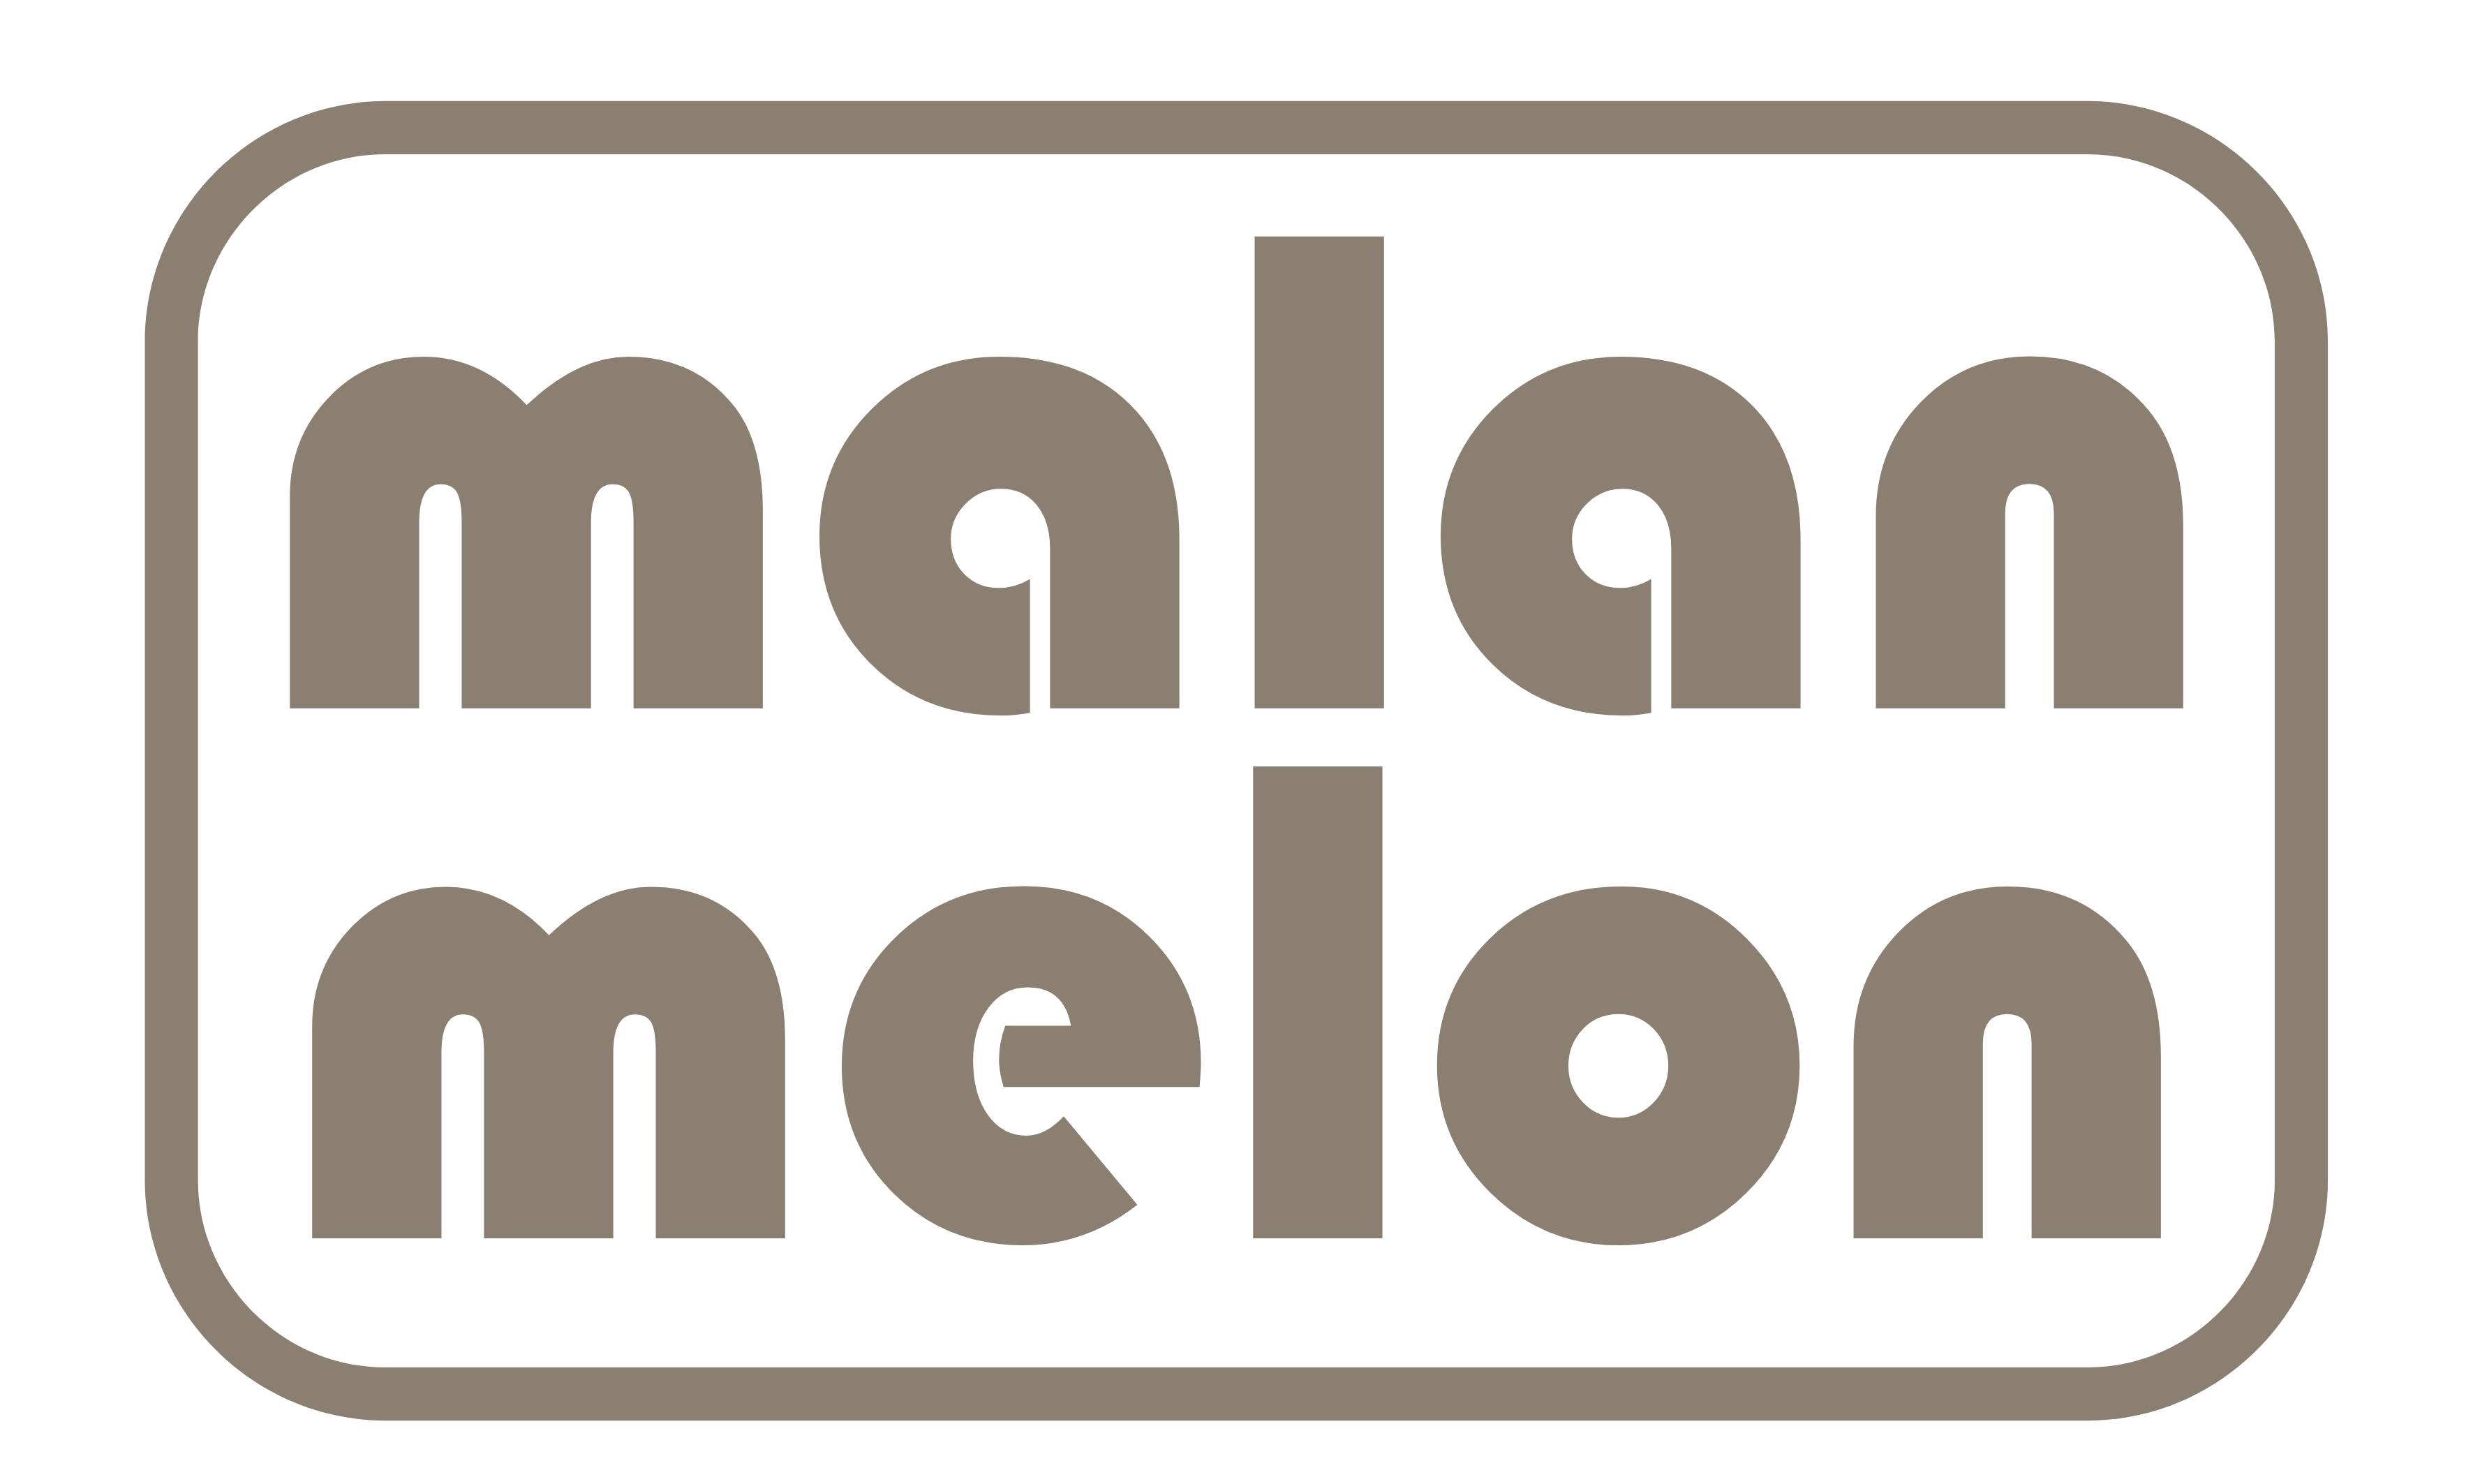 malanmelon - Kids T-Shirt – Organic Cotton – Sussy Slogan - Dark Grey on Multi-Colours